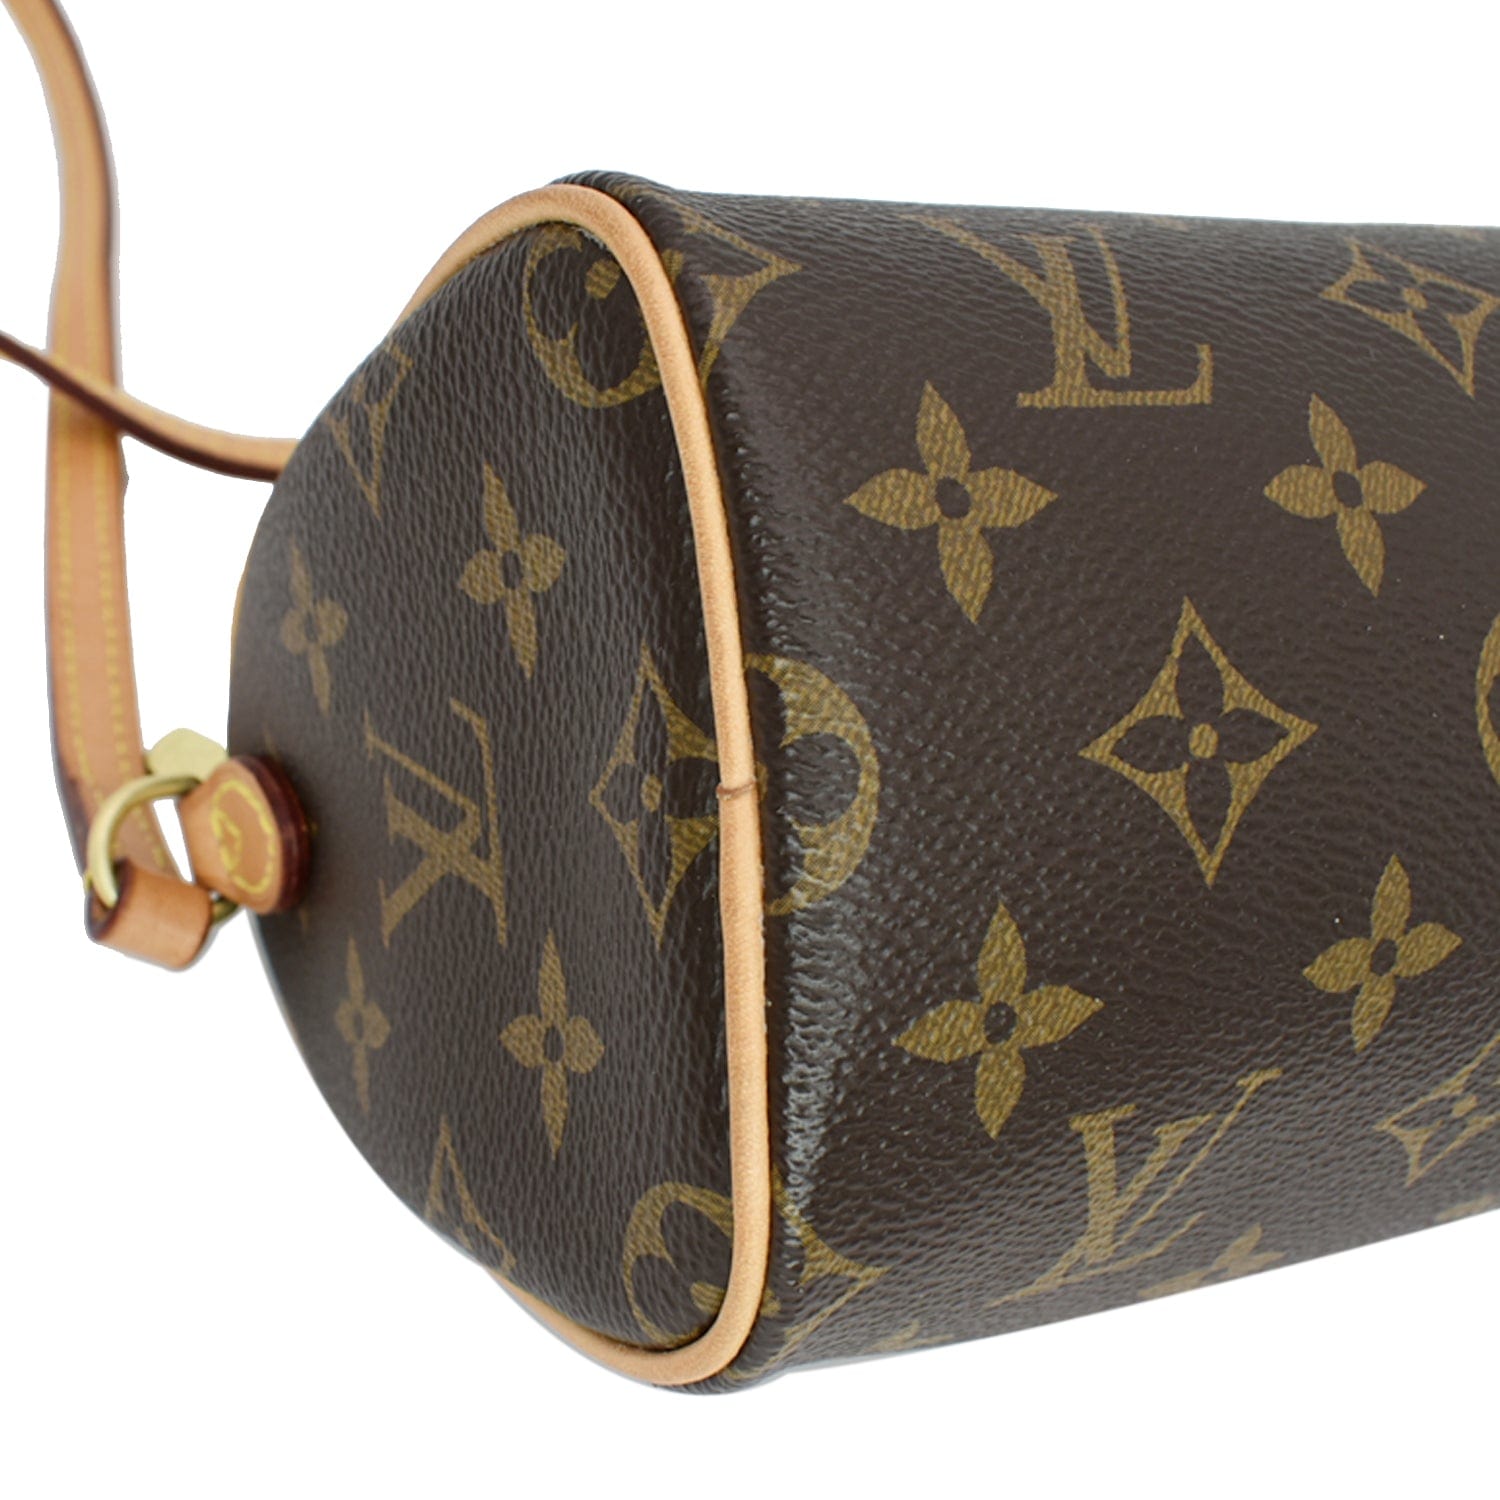 Louis Vuitton - Speedy Nano Leather Crossbody Bag